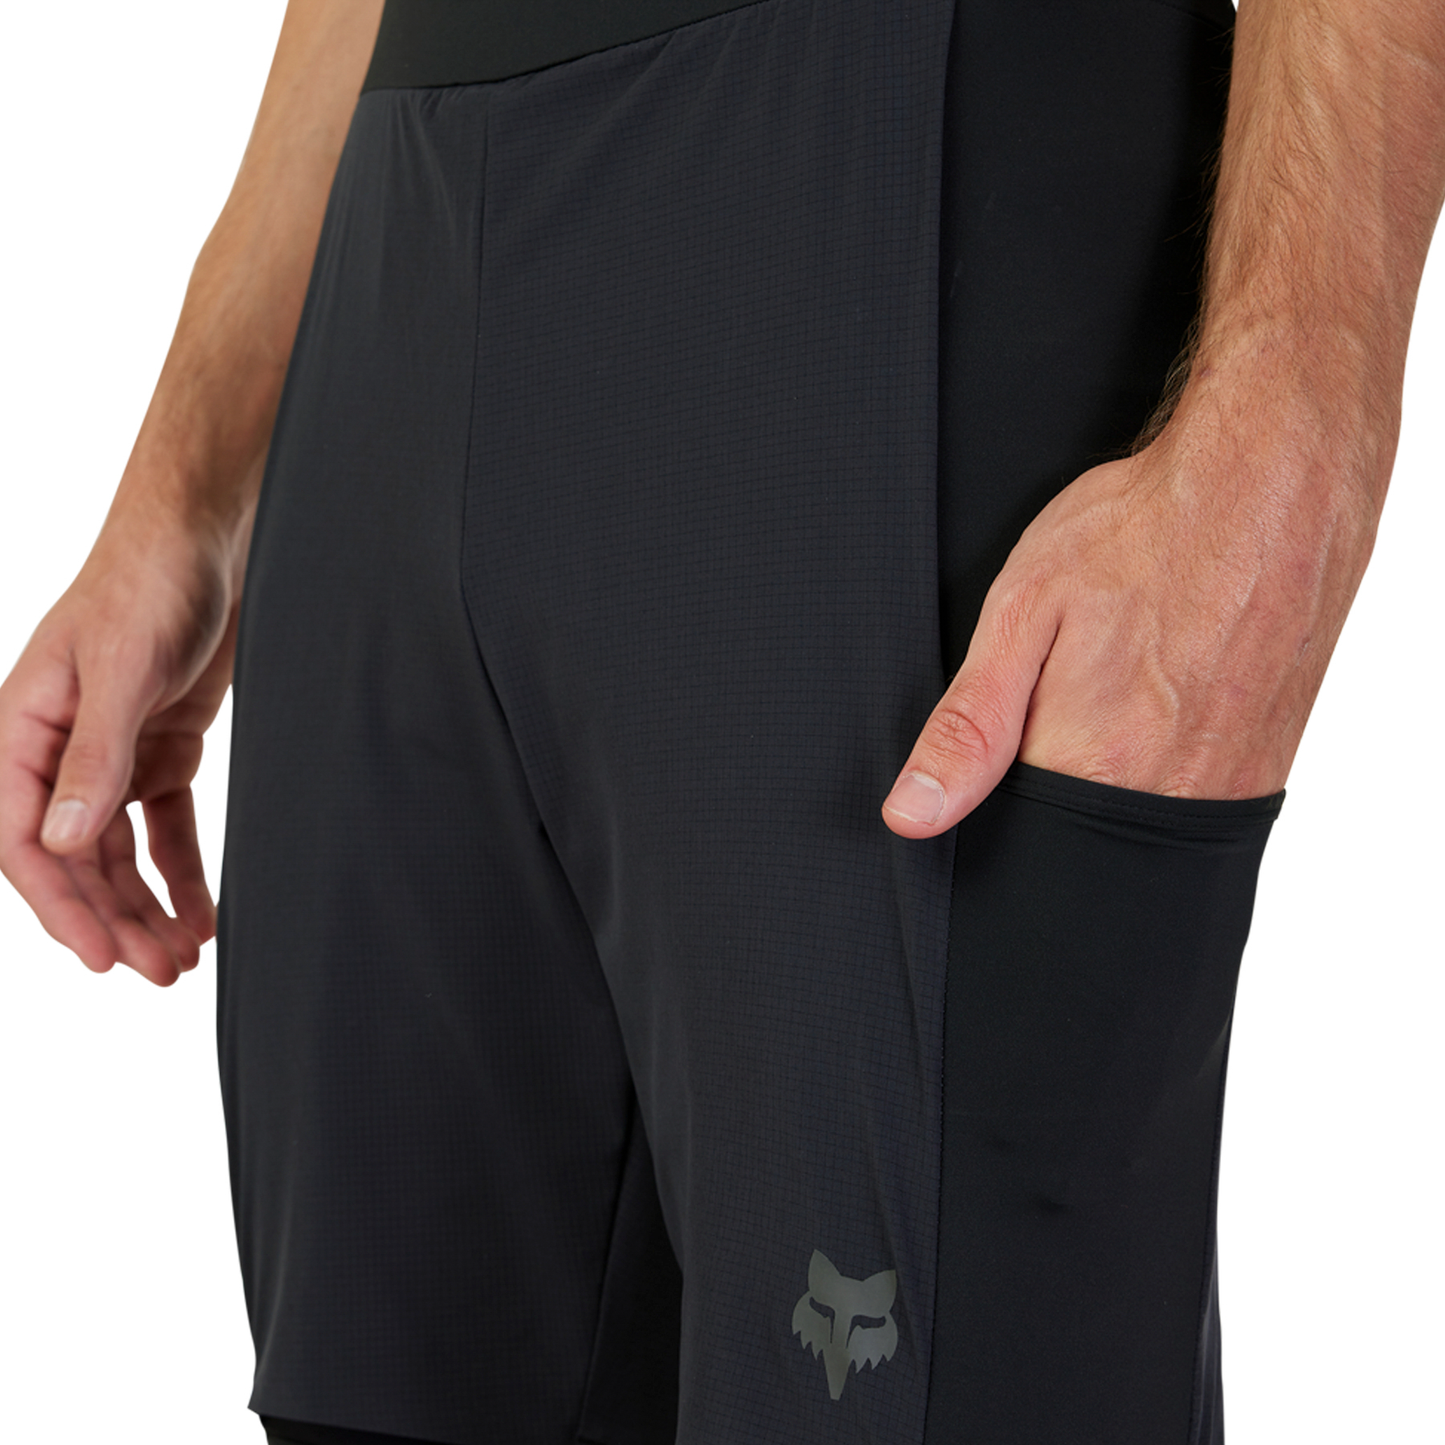 Fox Flexair Ascent Bib Shorts - L - Black - Image 3